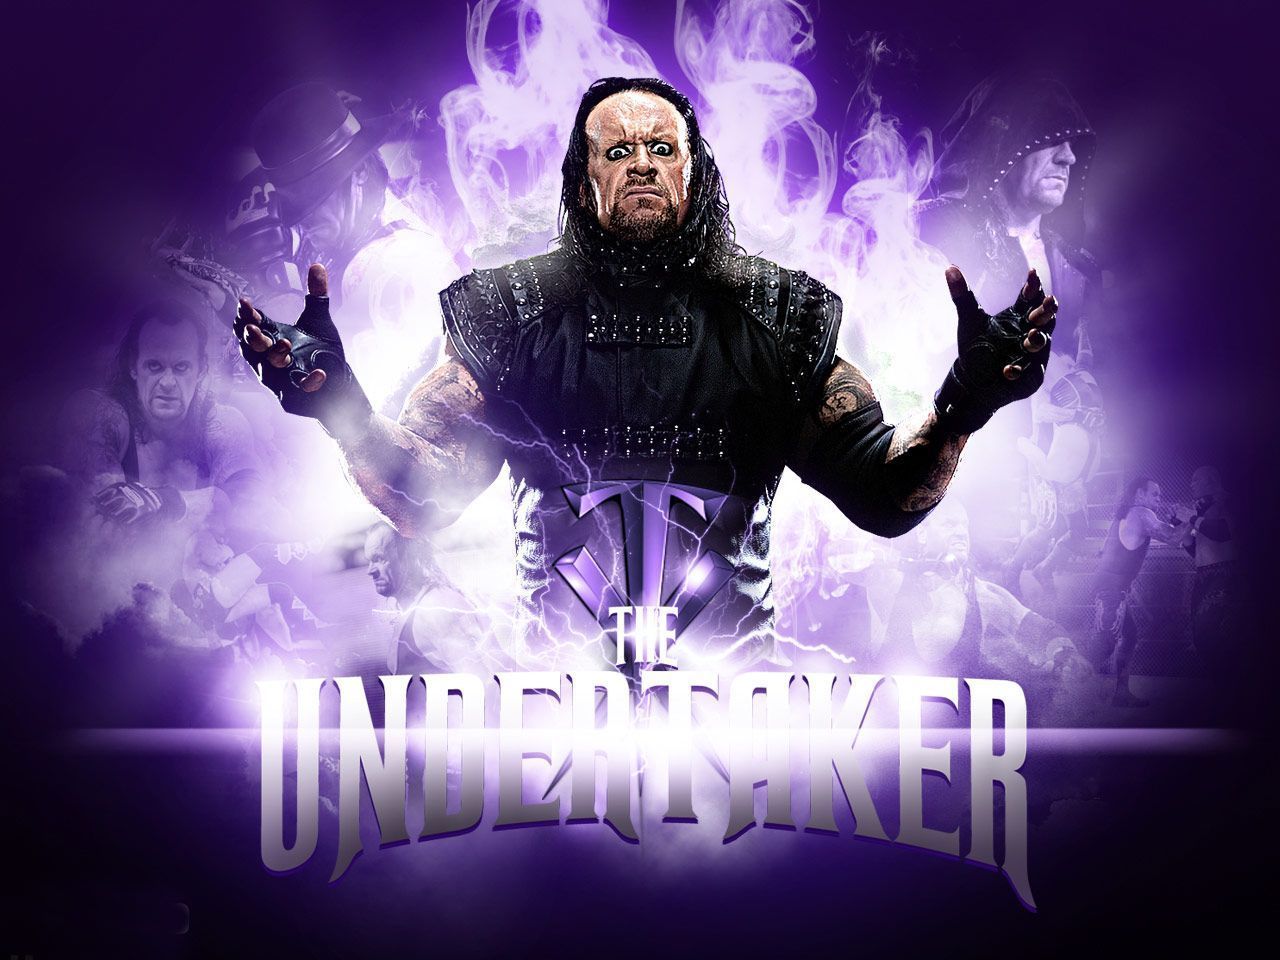 The Undertaker Wallpaper Free The Undertaker Background